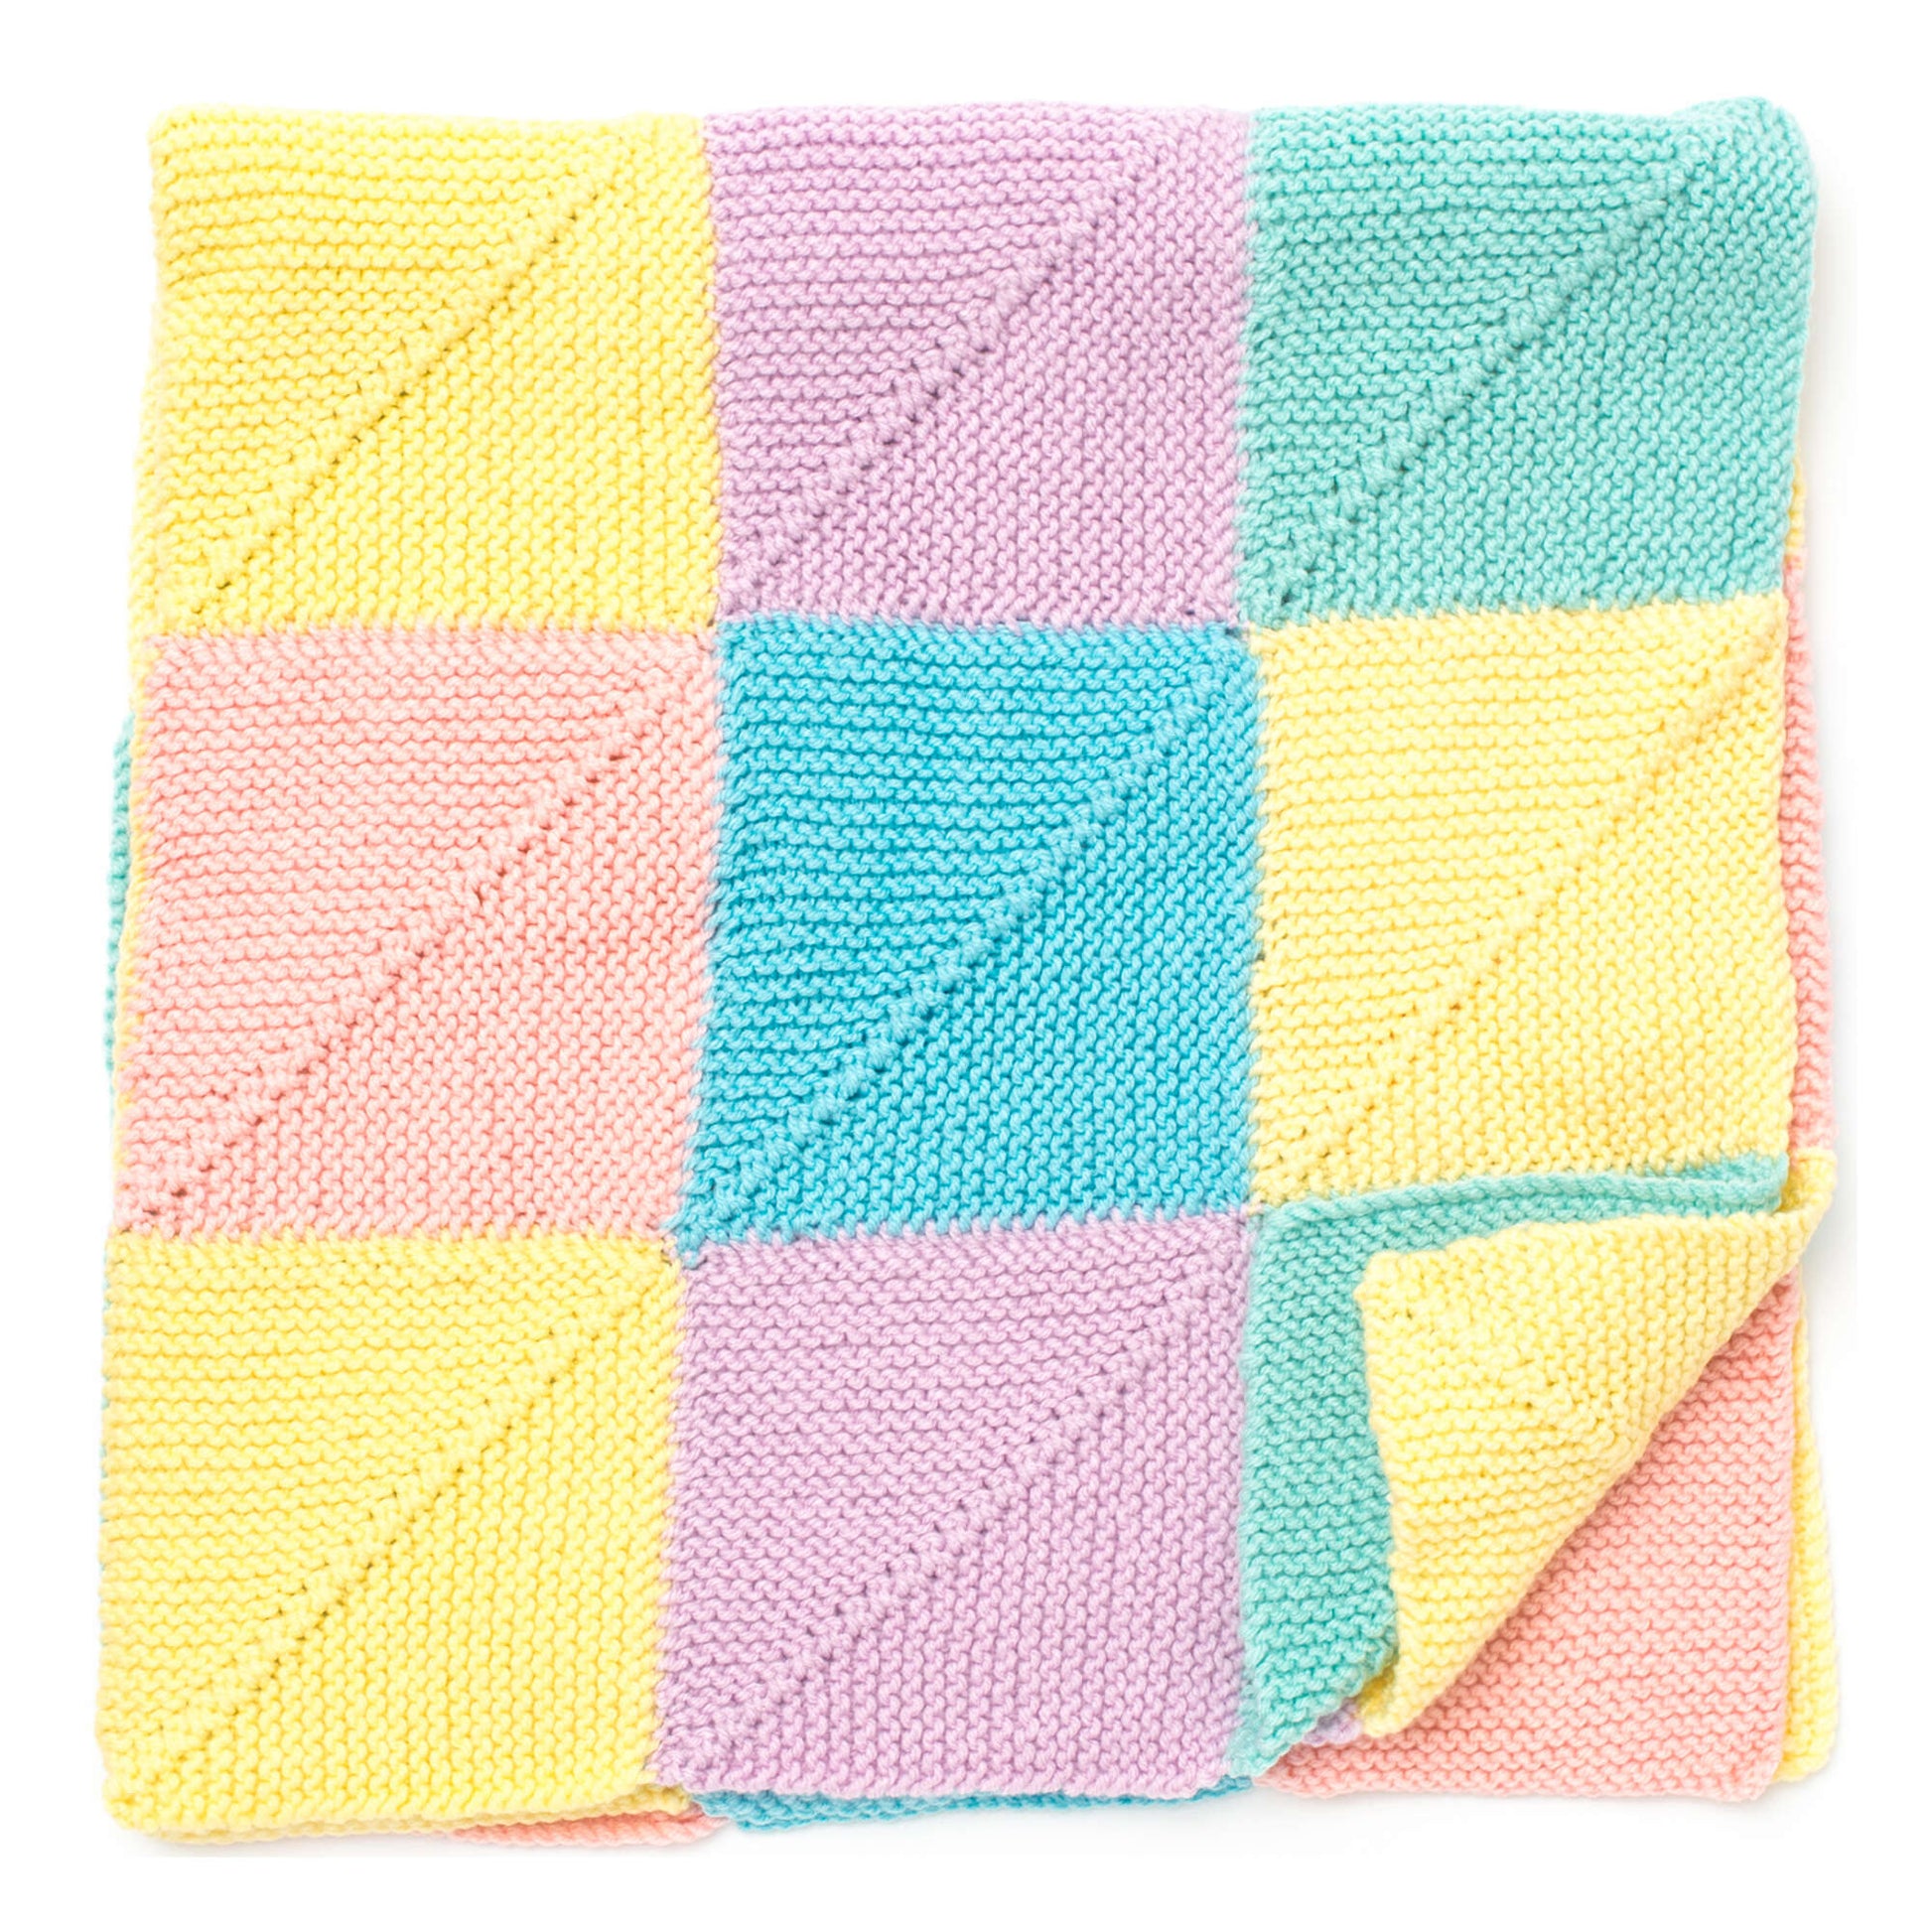 Bernat Mitered Squares Knit Blanket Knit Blanket made in Bernat Giggles yarn